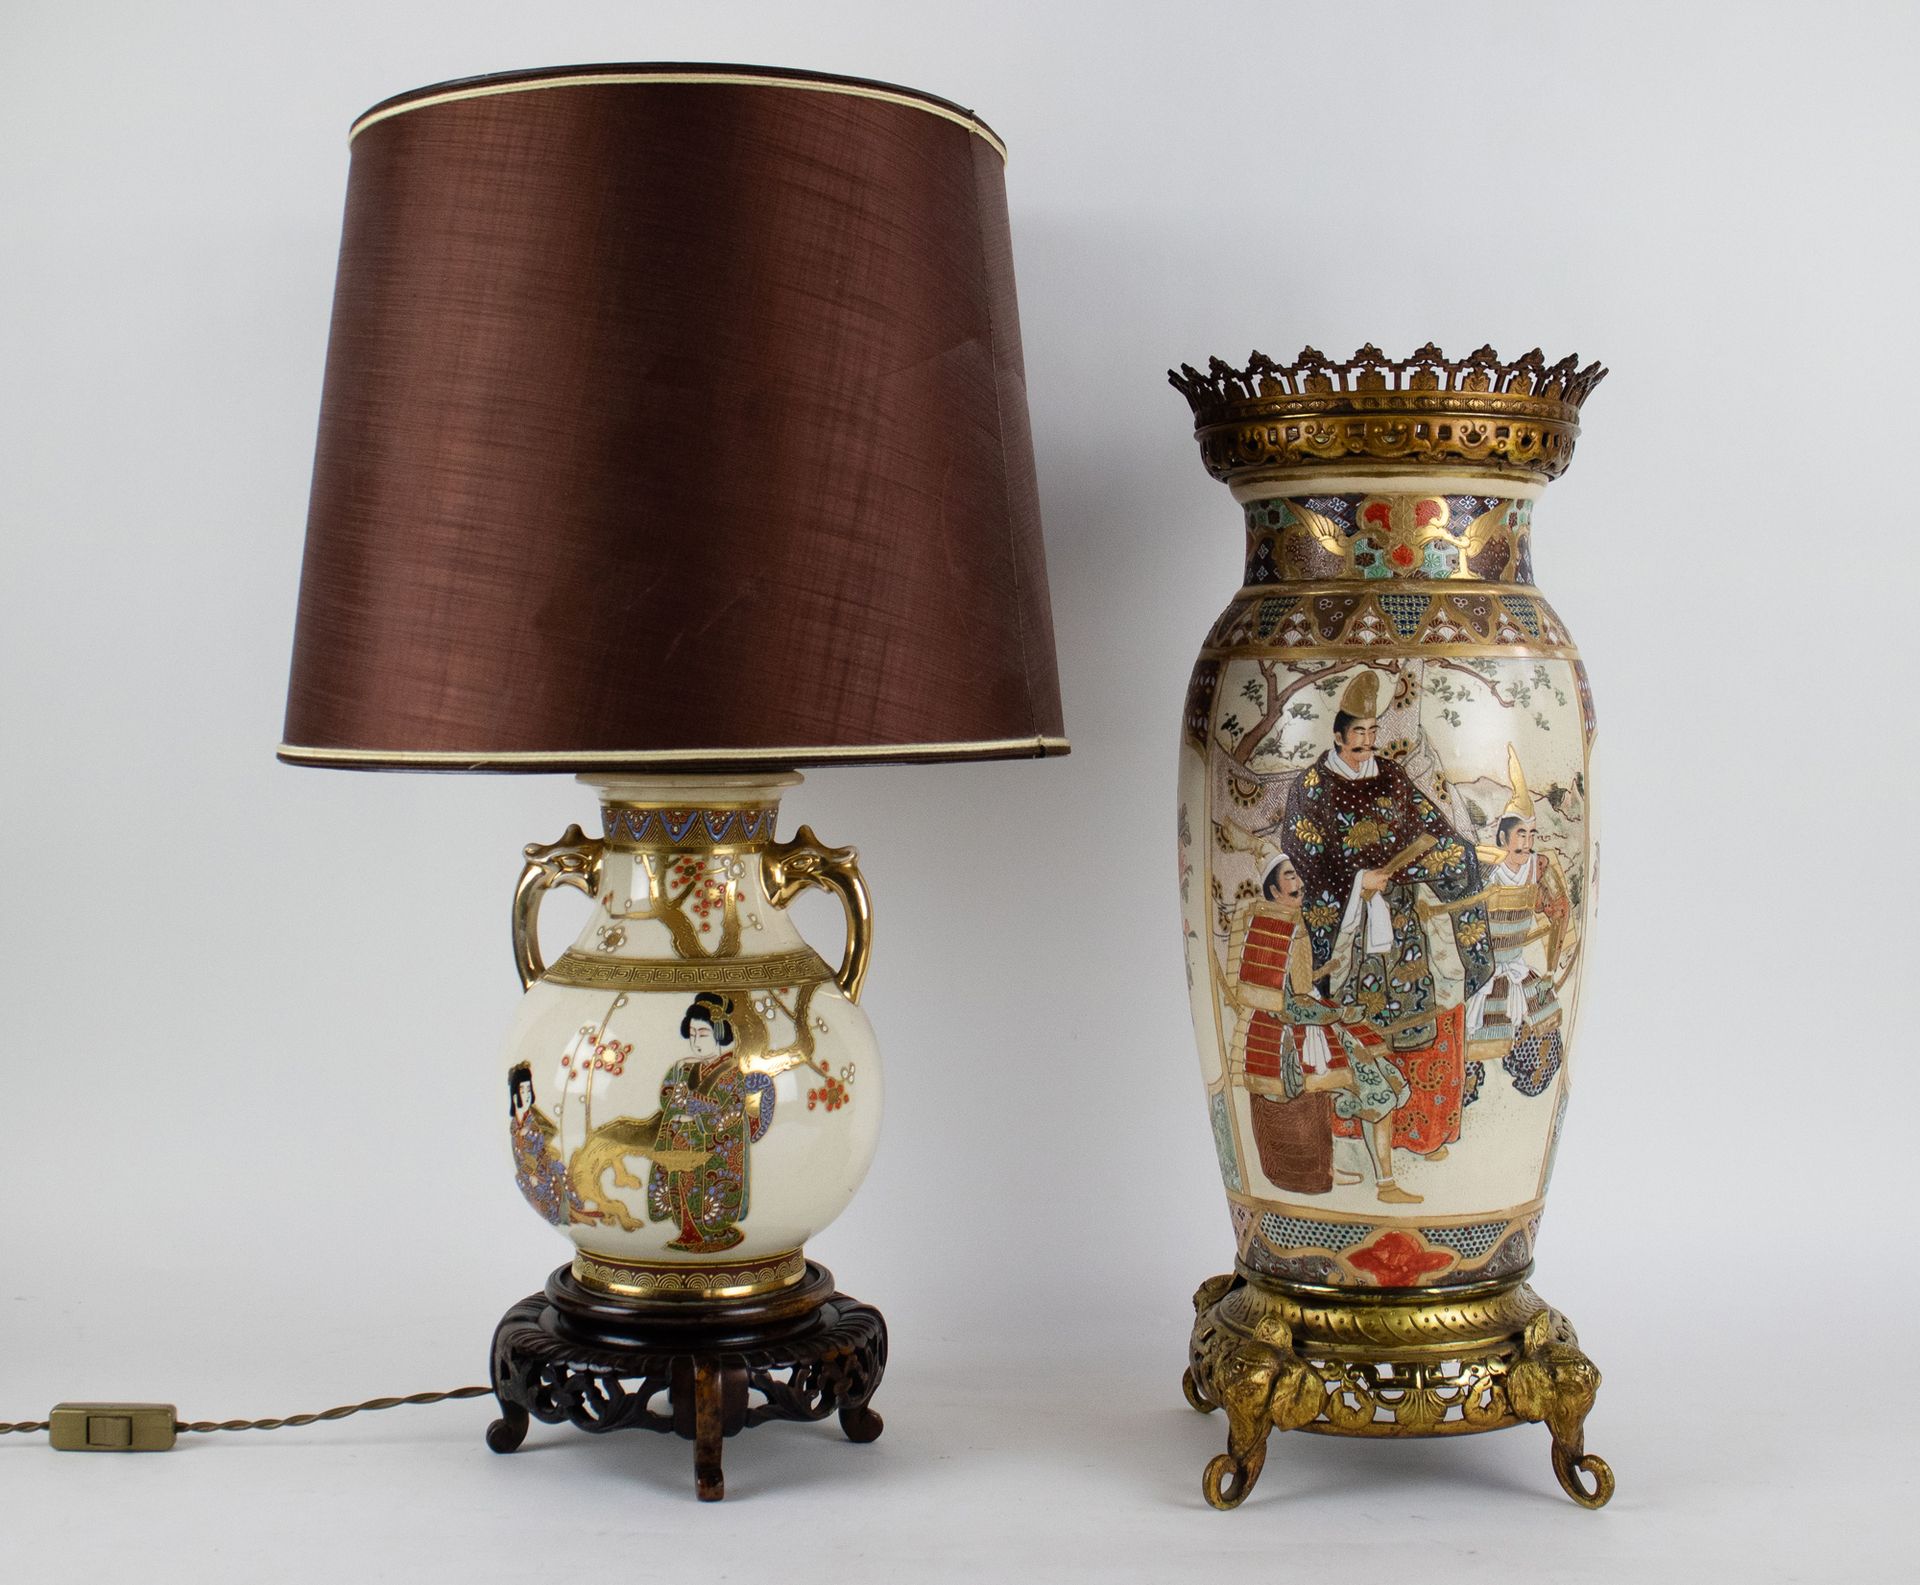 Null 萨摩花瓶和台灯
萨摩花瓶和台灯 萨摩花瓶与青铜支架。补充：一个萨摩花瓶被改造成一盏灯。萨摩花瓶与铜架。增加：一个萨摩花瓶变成了一盏灯。高49.5 - &hellip;